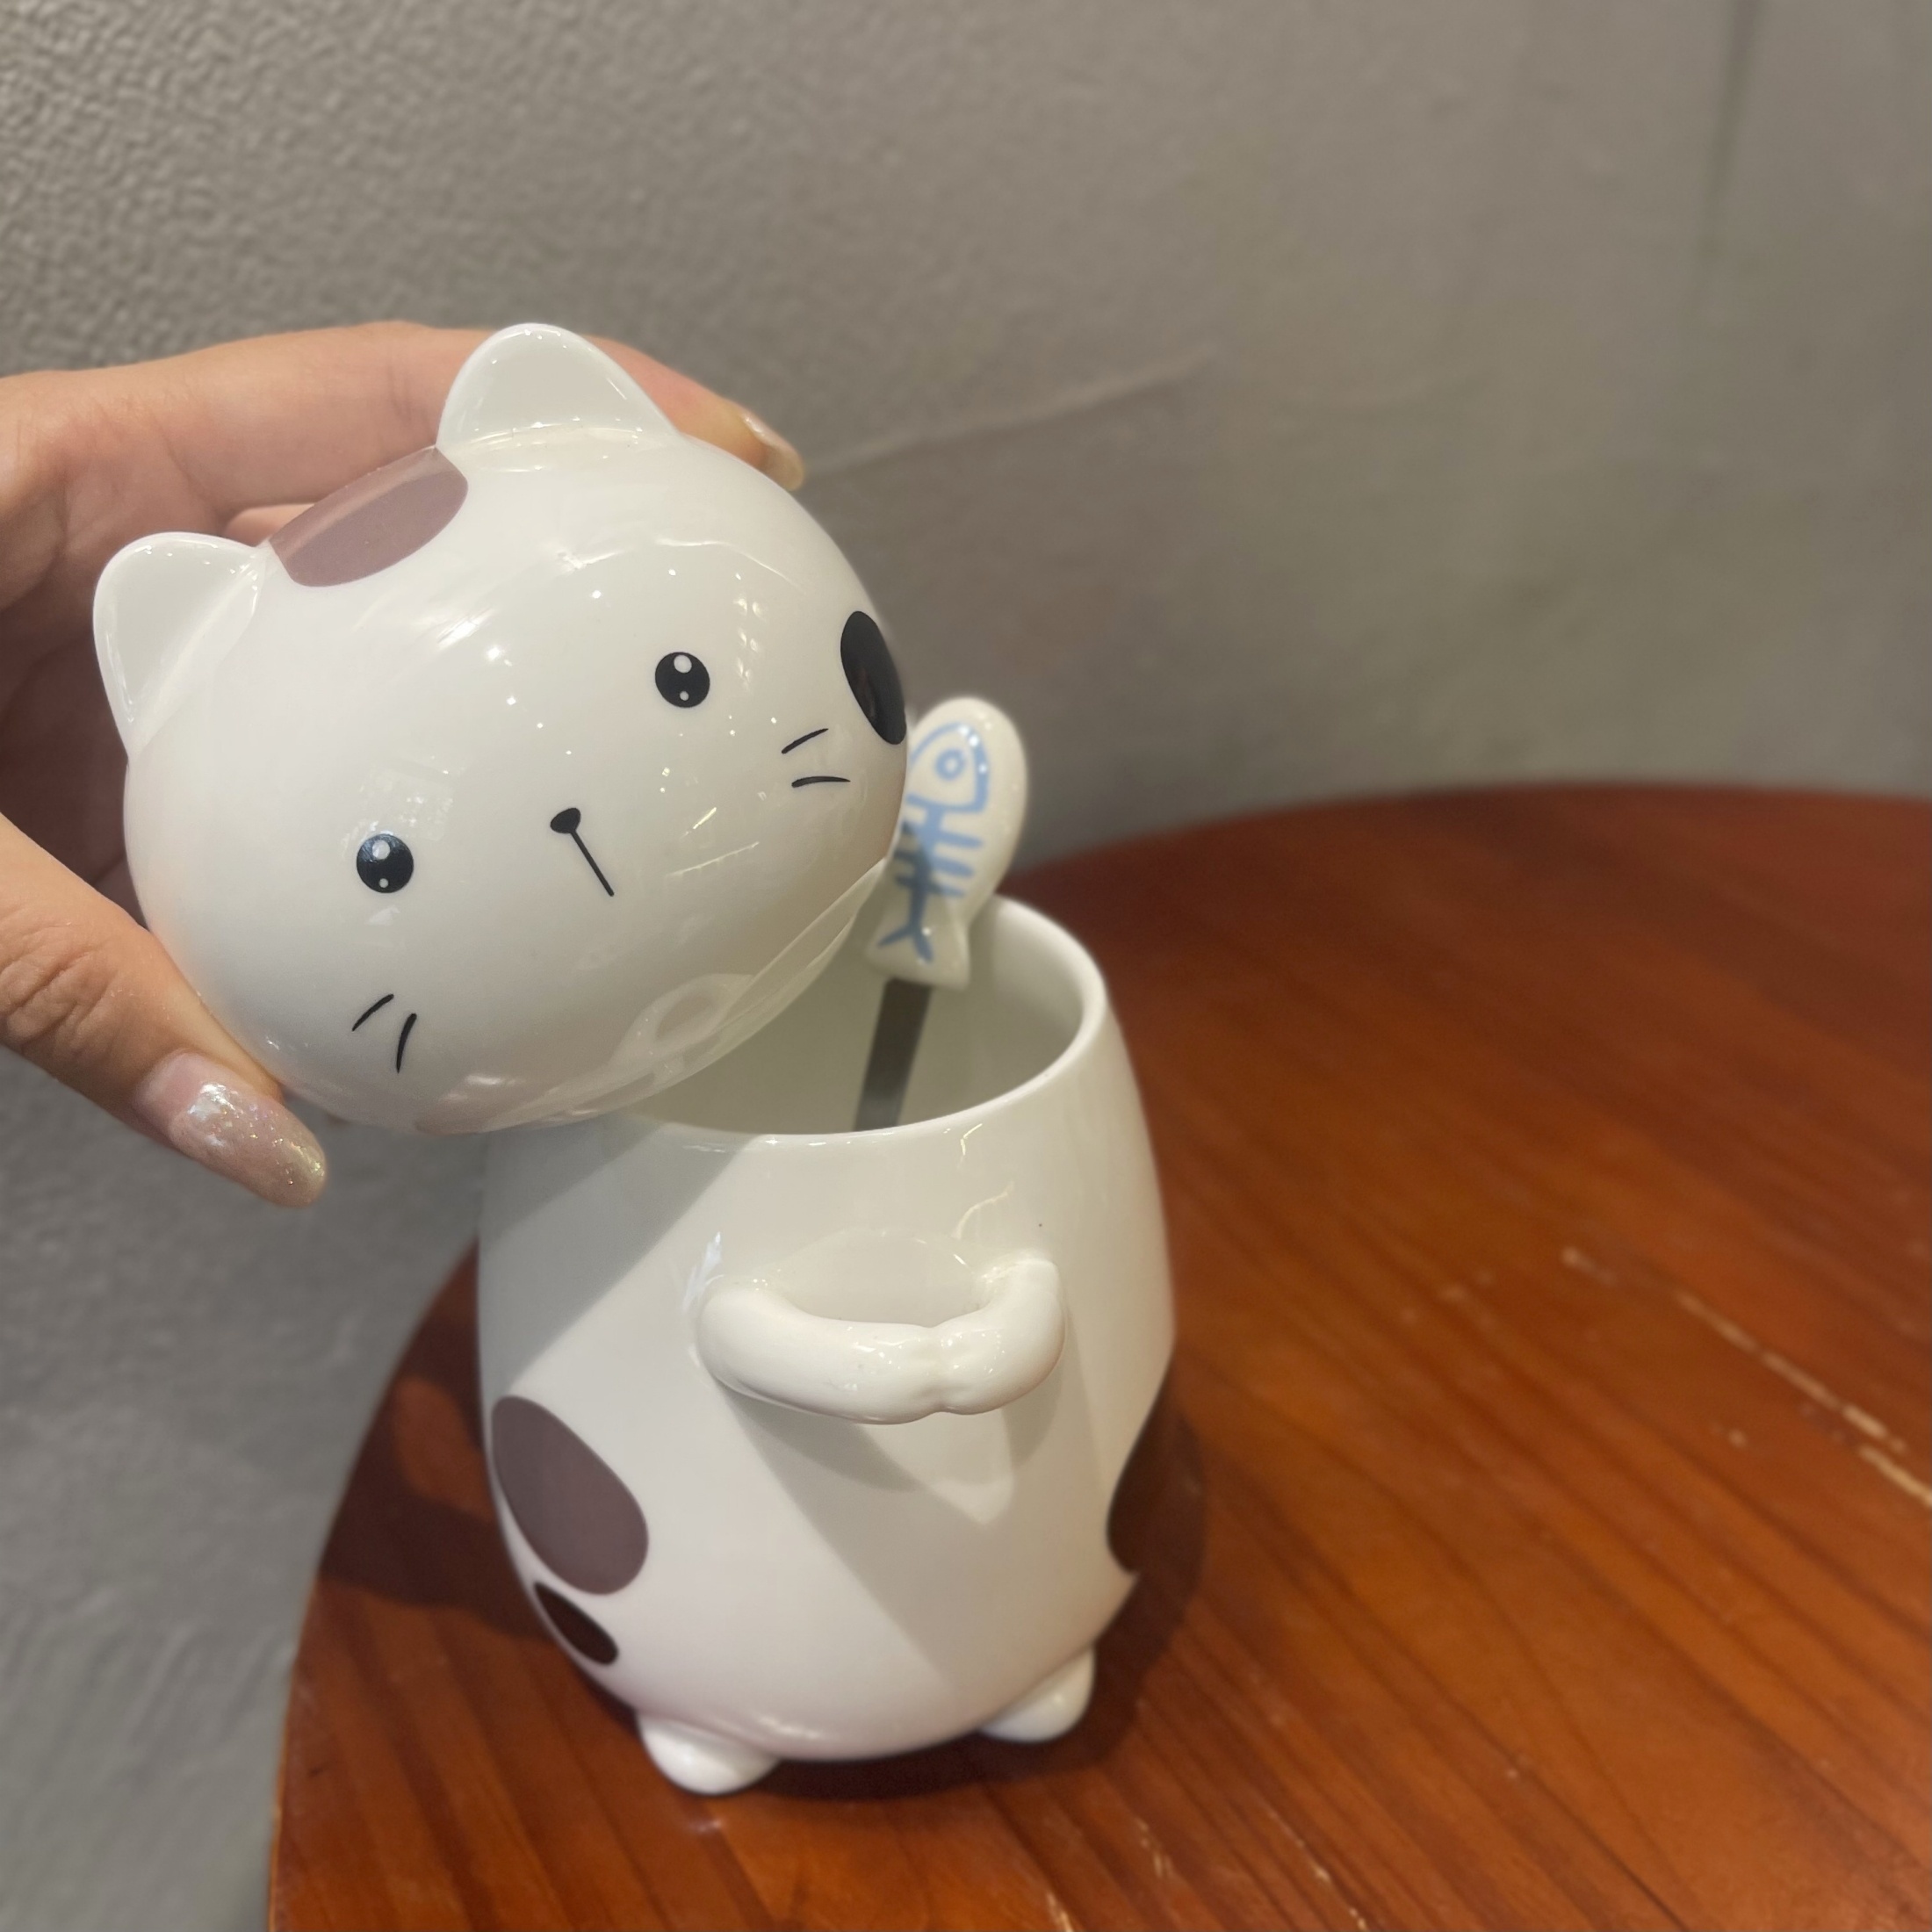 1pc, Cartoon Kitten Coffee Mug, 400ml/13.5oz Ceramic Coffee Cups, Cute  Kawaii Cat Water Cups, Summer Winter Drinkware, Home Kitchen Items,  Birthday Gi